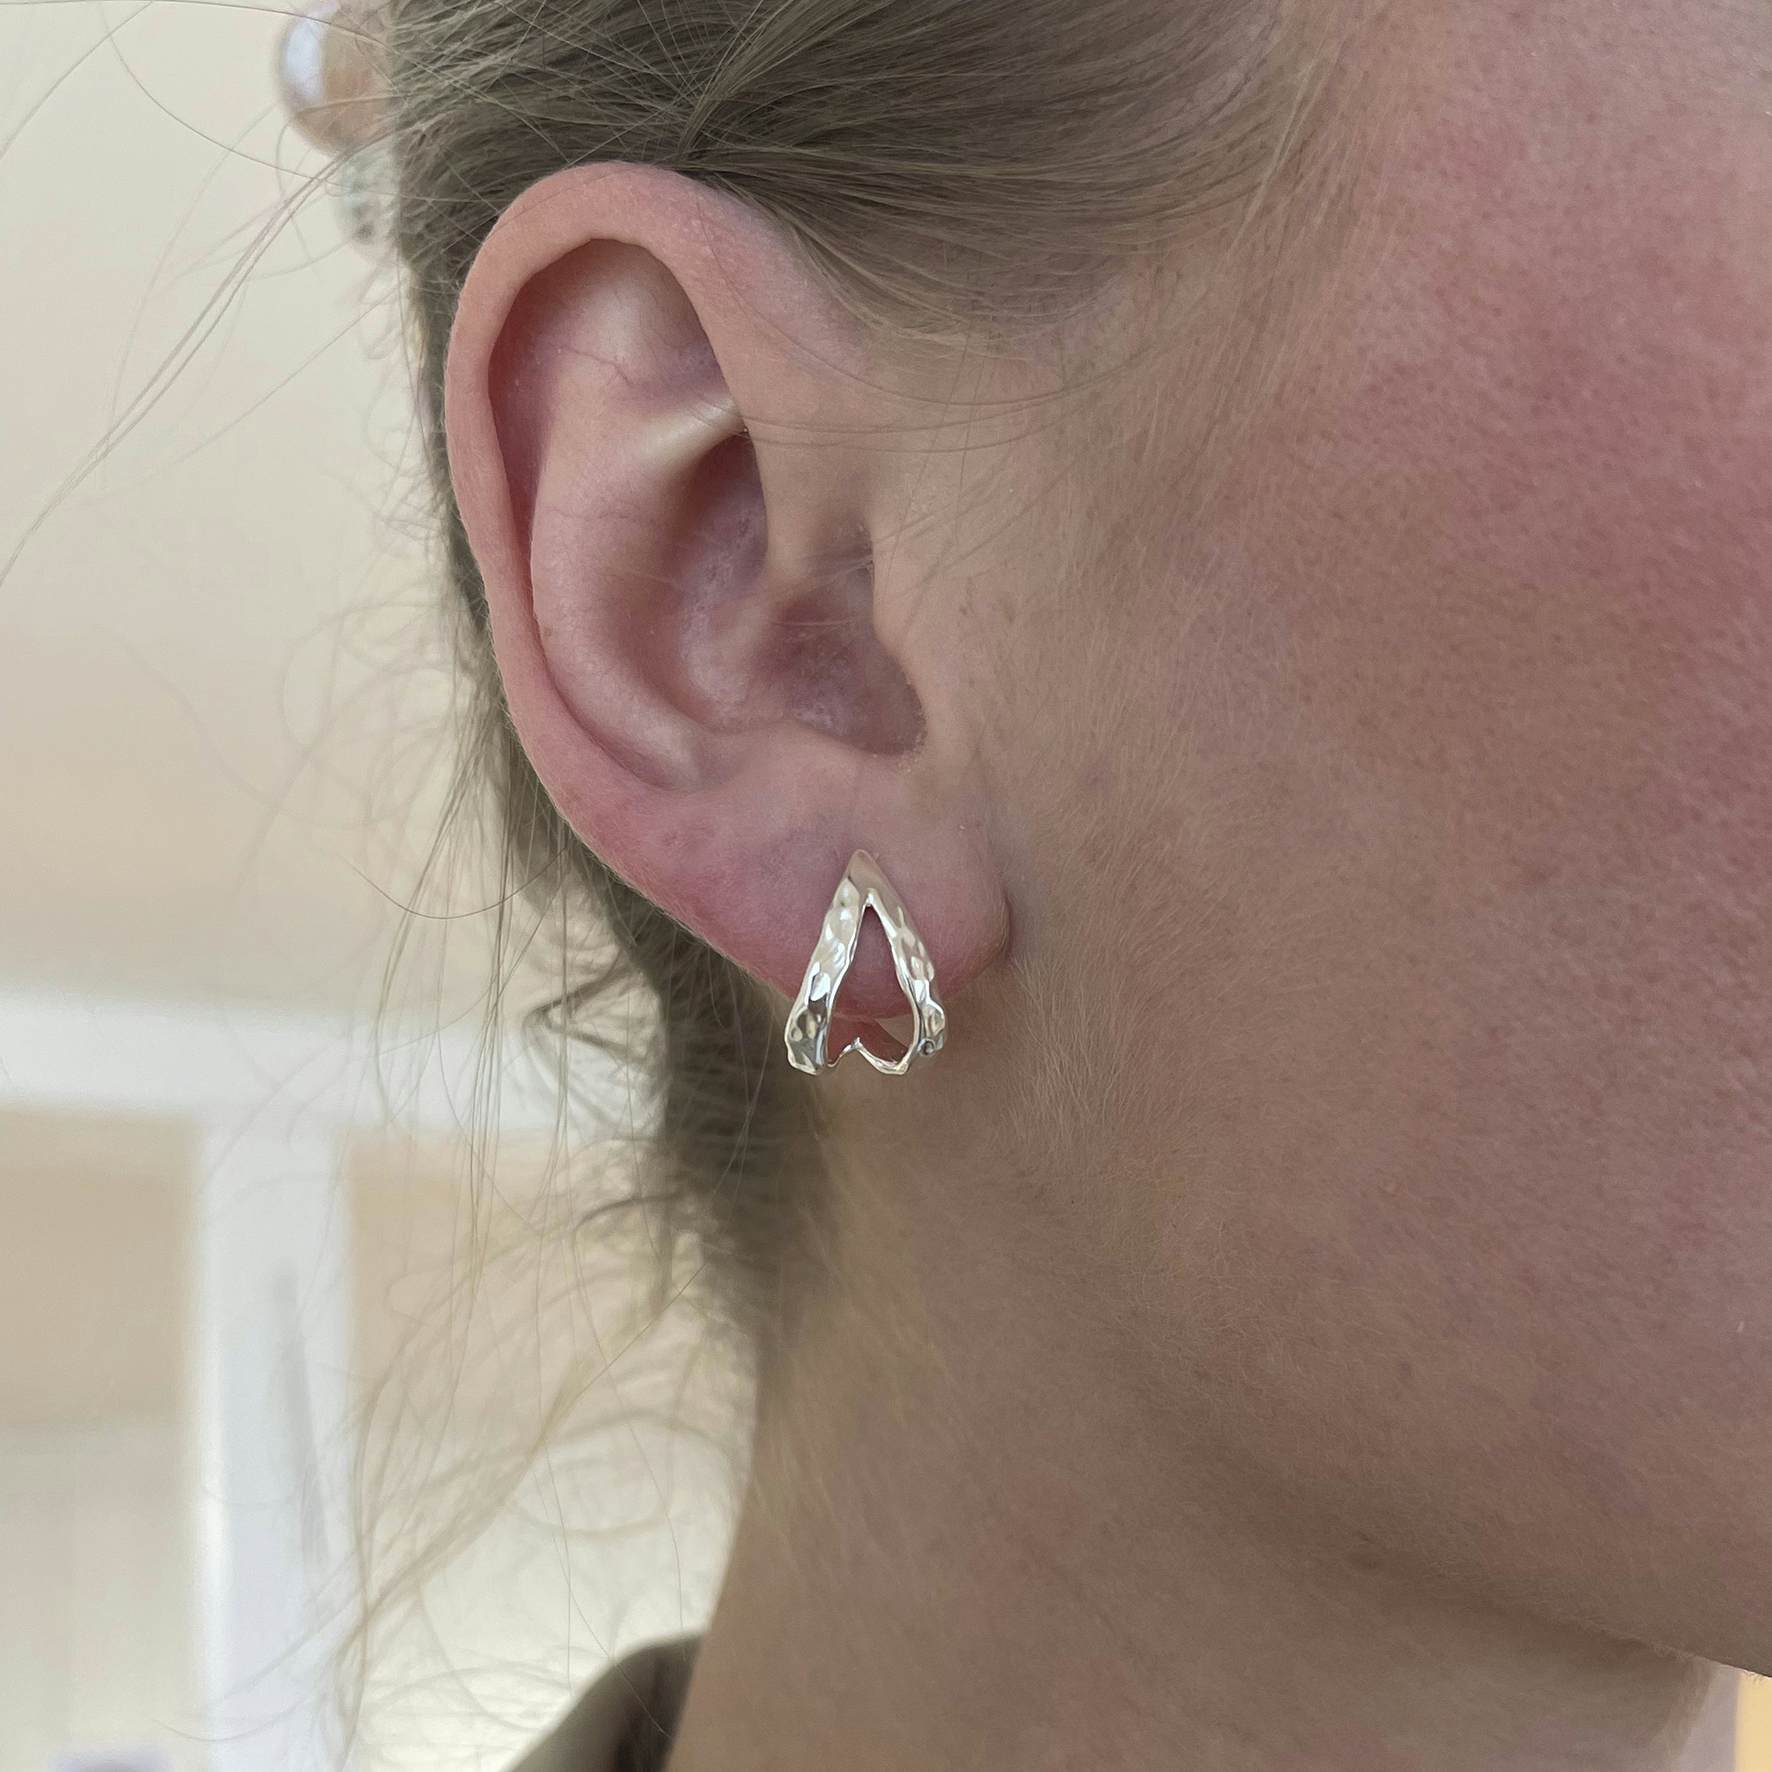 Breakup Earring from Jane Kønig in Goldplated-Silver Sterling 925